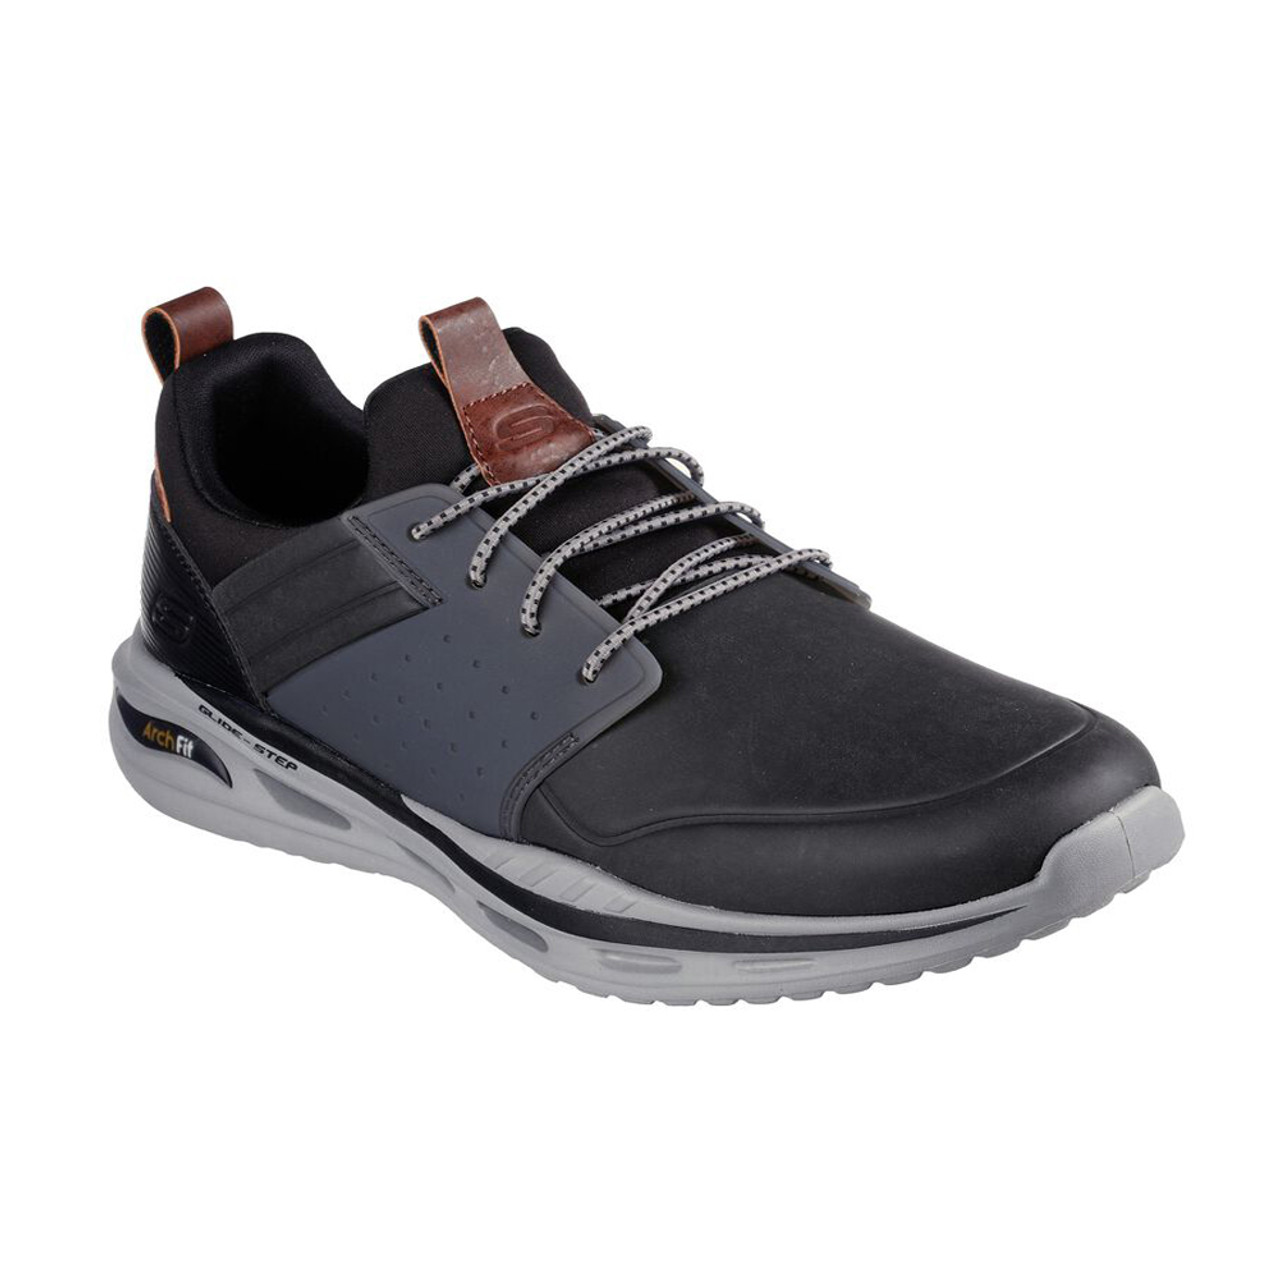 Skechers Men's Arch Fit Walking Shoe - | Discount Men's Shoes & - Shoolu.com | Shoolu.com